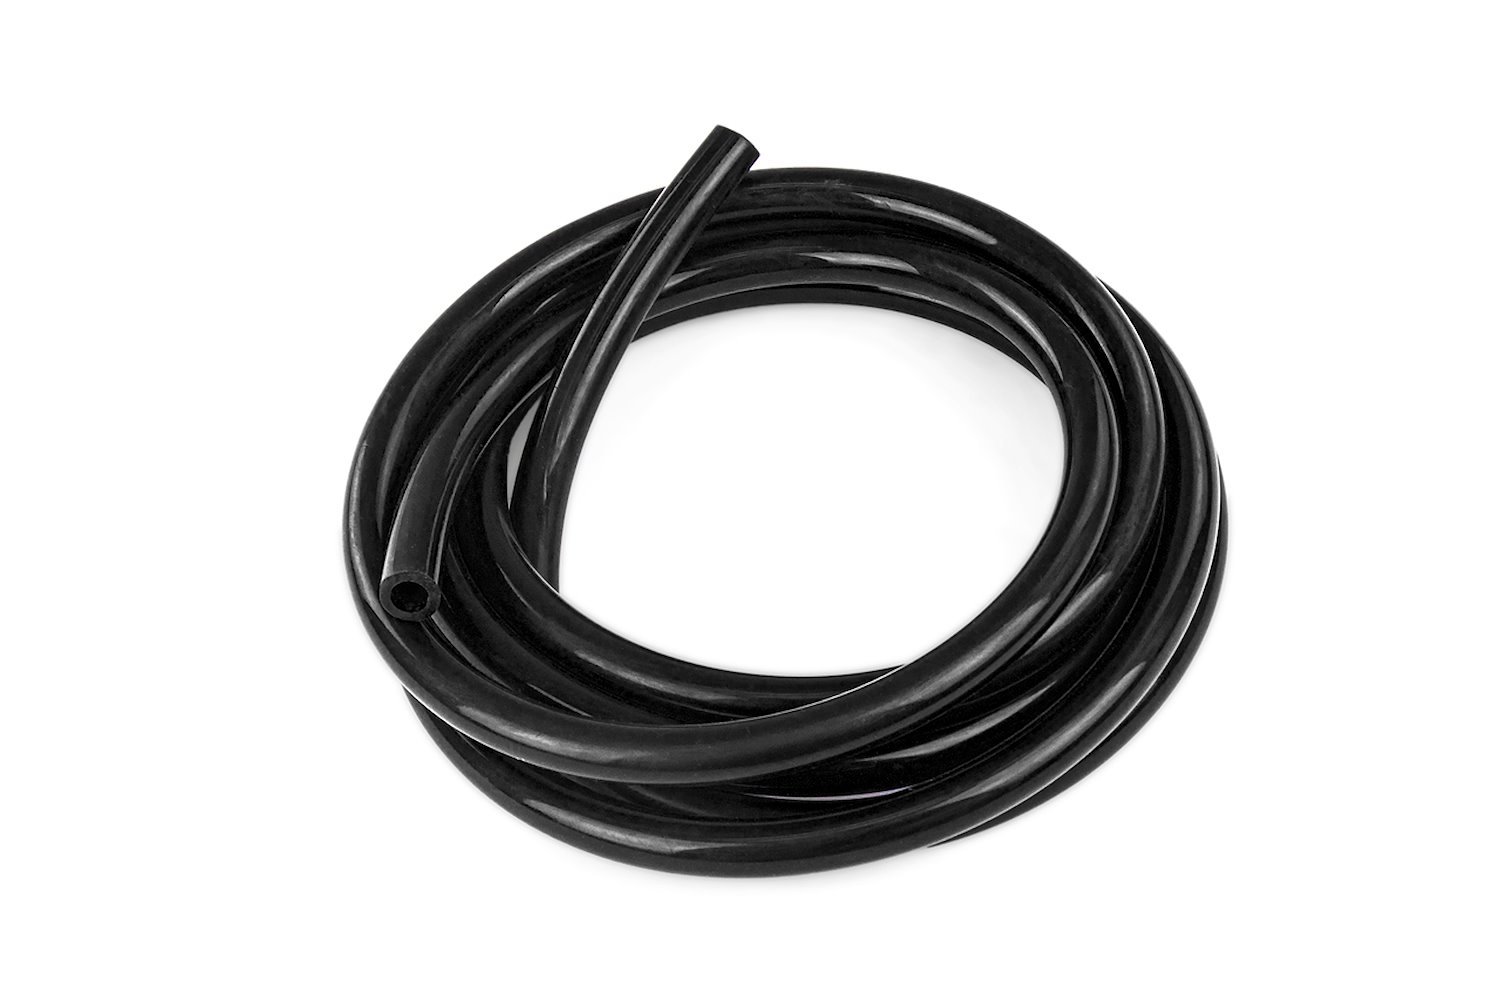 HTSVH4-BLKx5 High-Temperature Silicone Vacuum Hose Tubing, 5/32 in. ID, 5 ft. Roll, Black